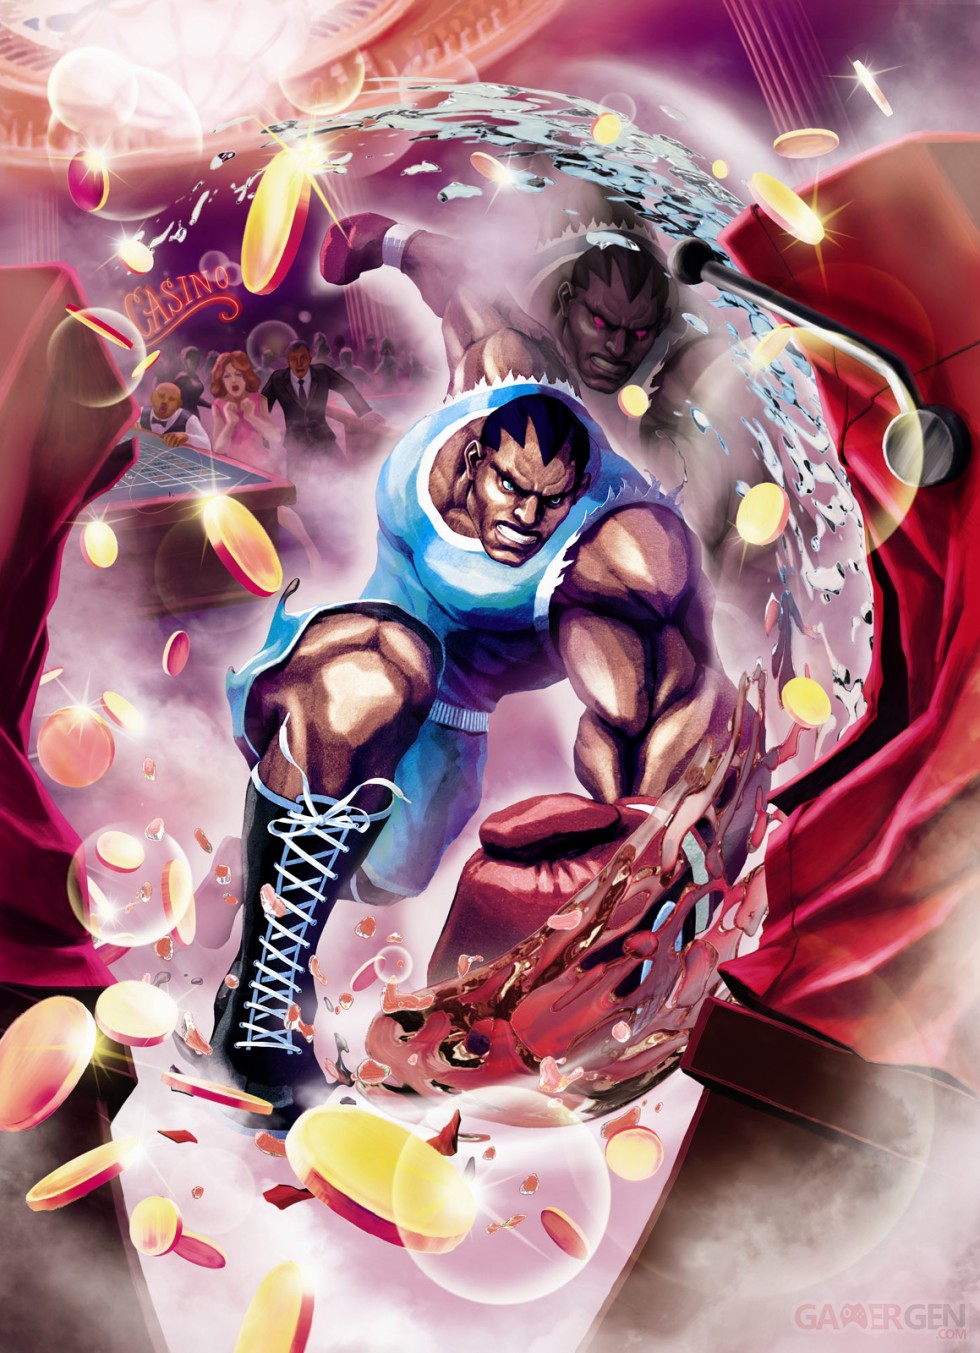 Street-Fighter-x-Tekken-Image-170112-19